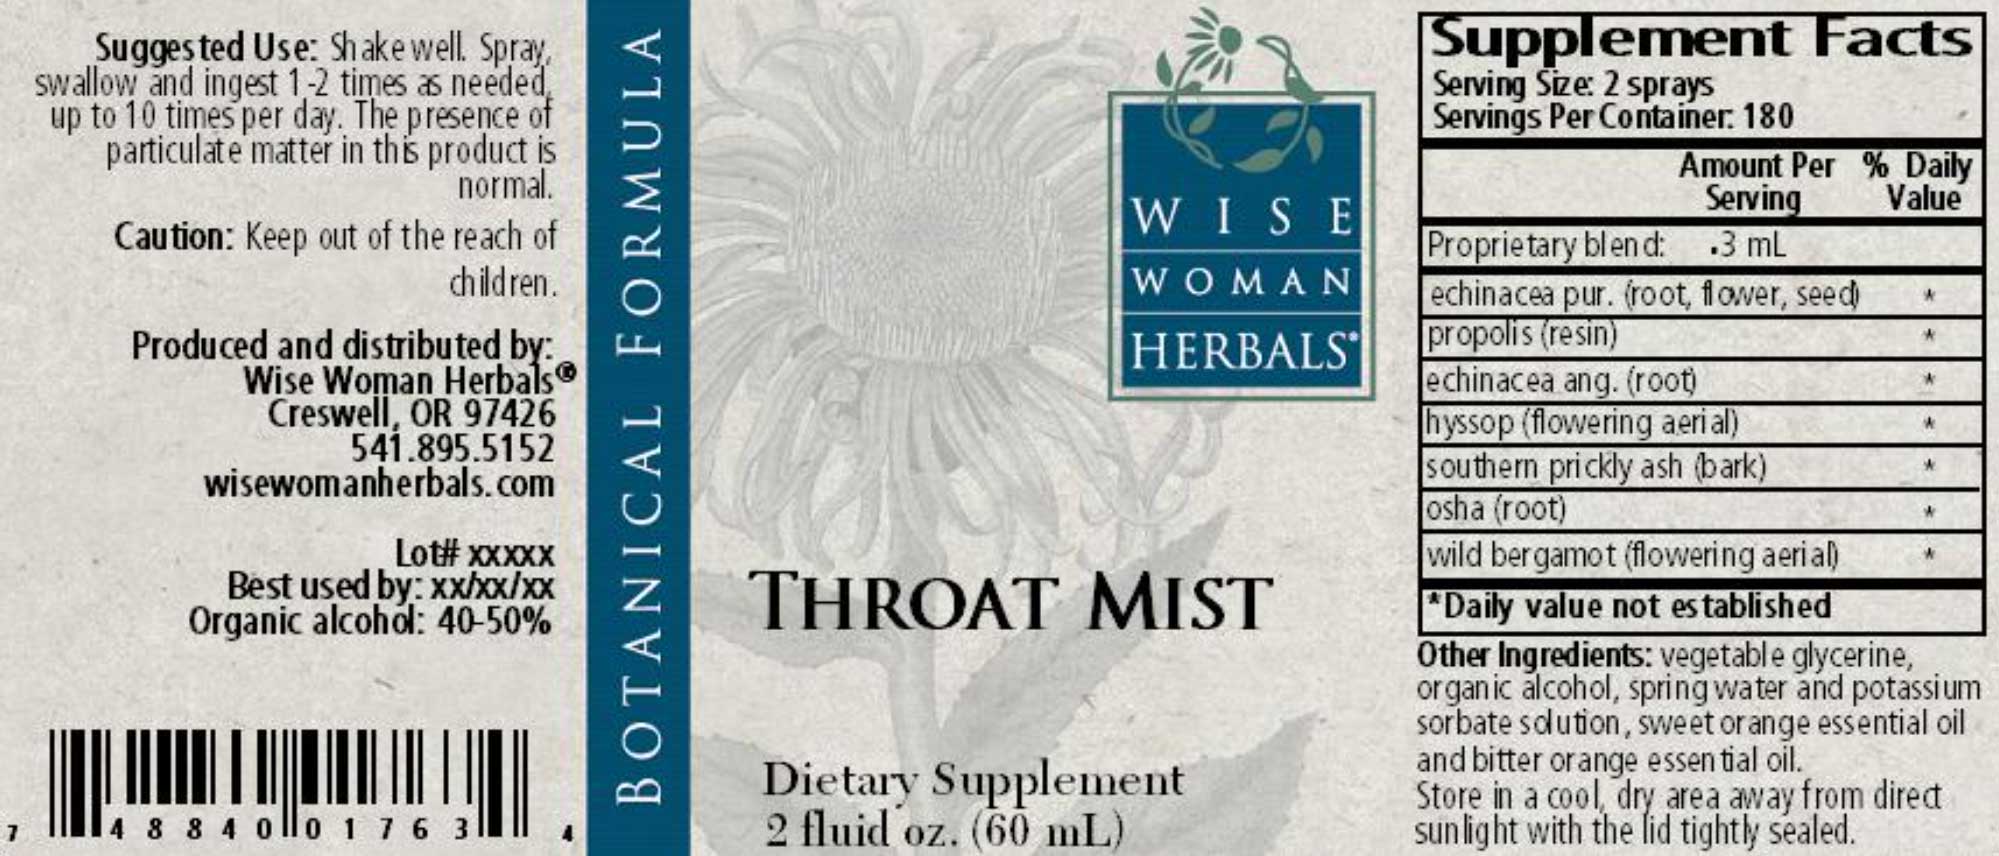 Wise Woman Herbals Throat Mist Label